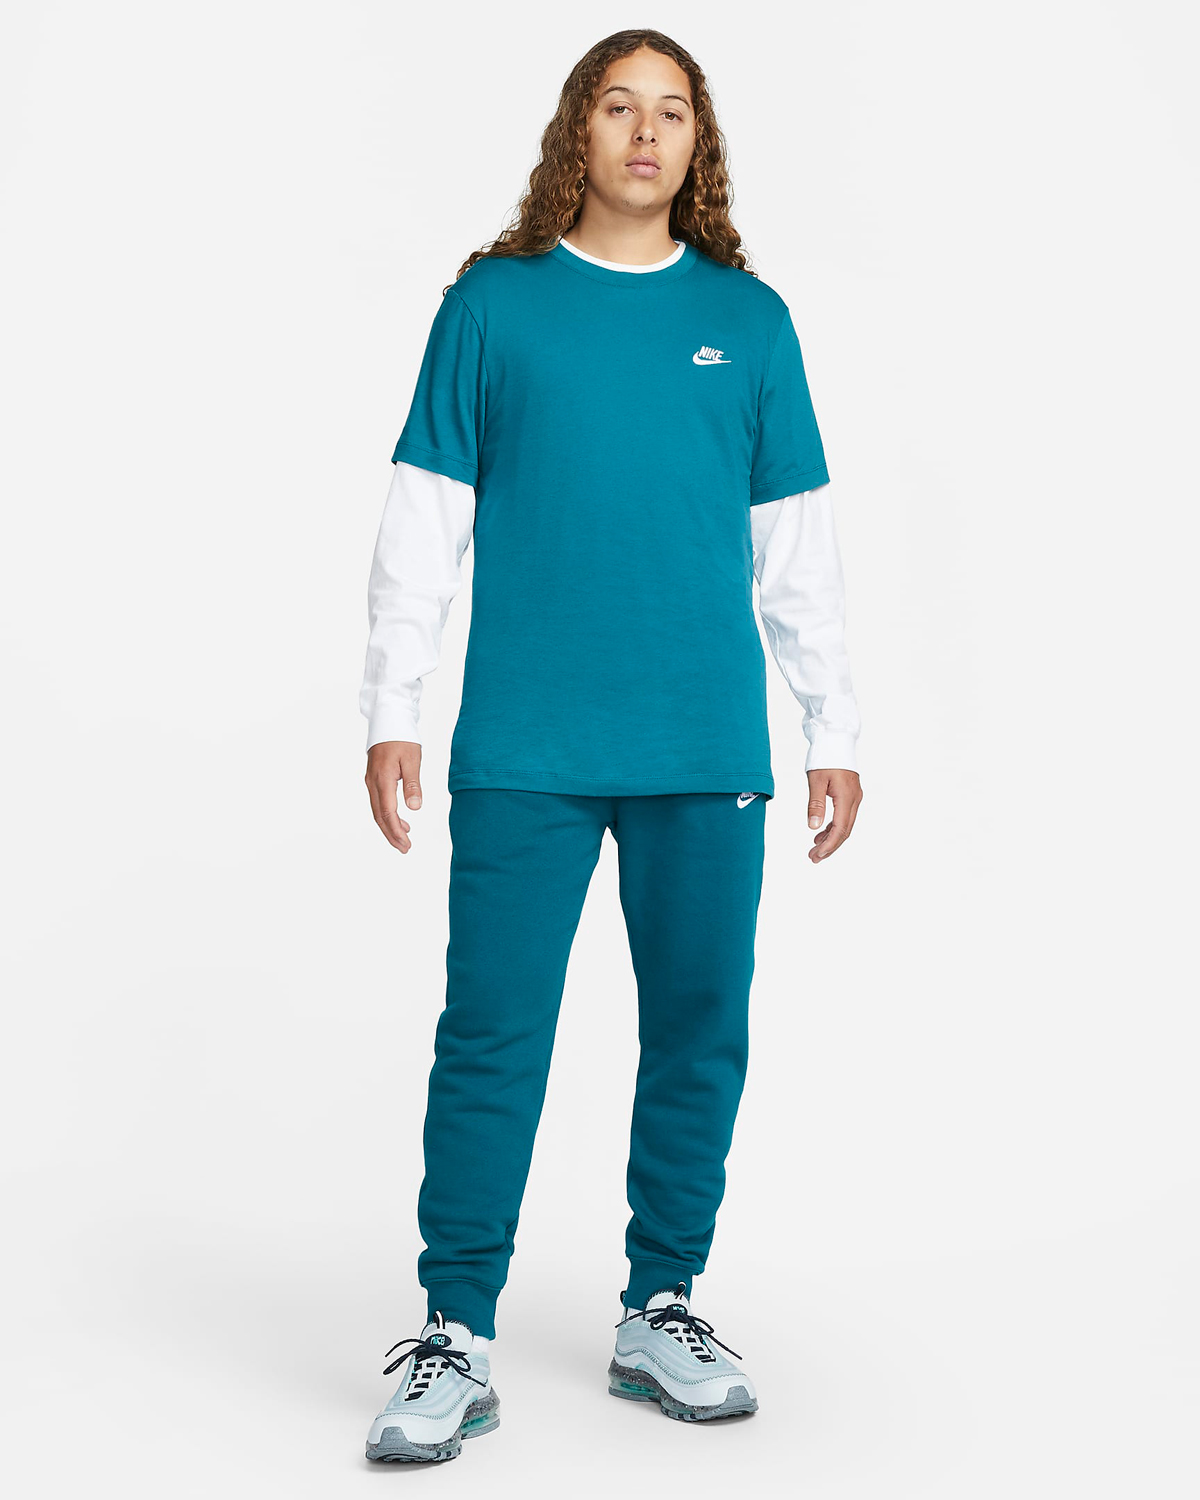 Nike-Sportswear-Club-T-Shirt-Geode-Teal-Outfit